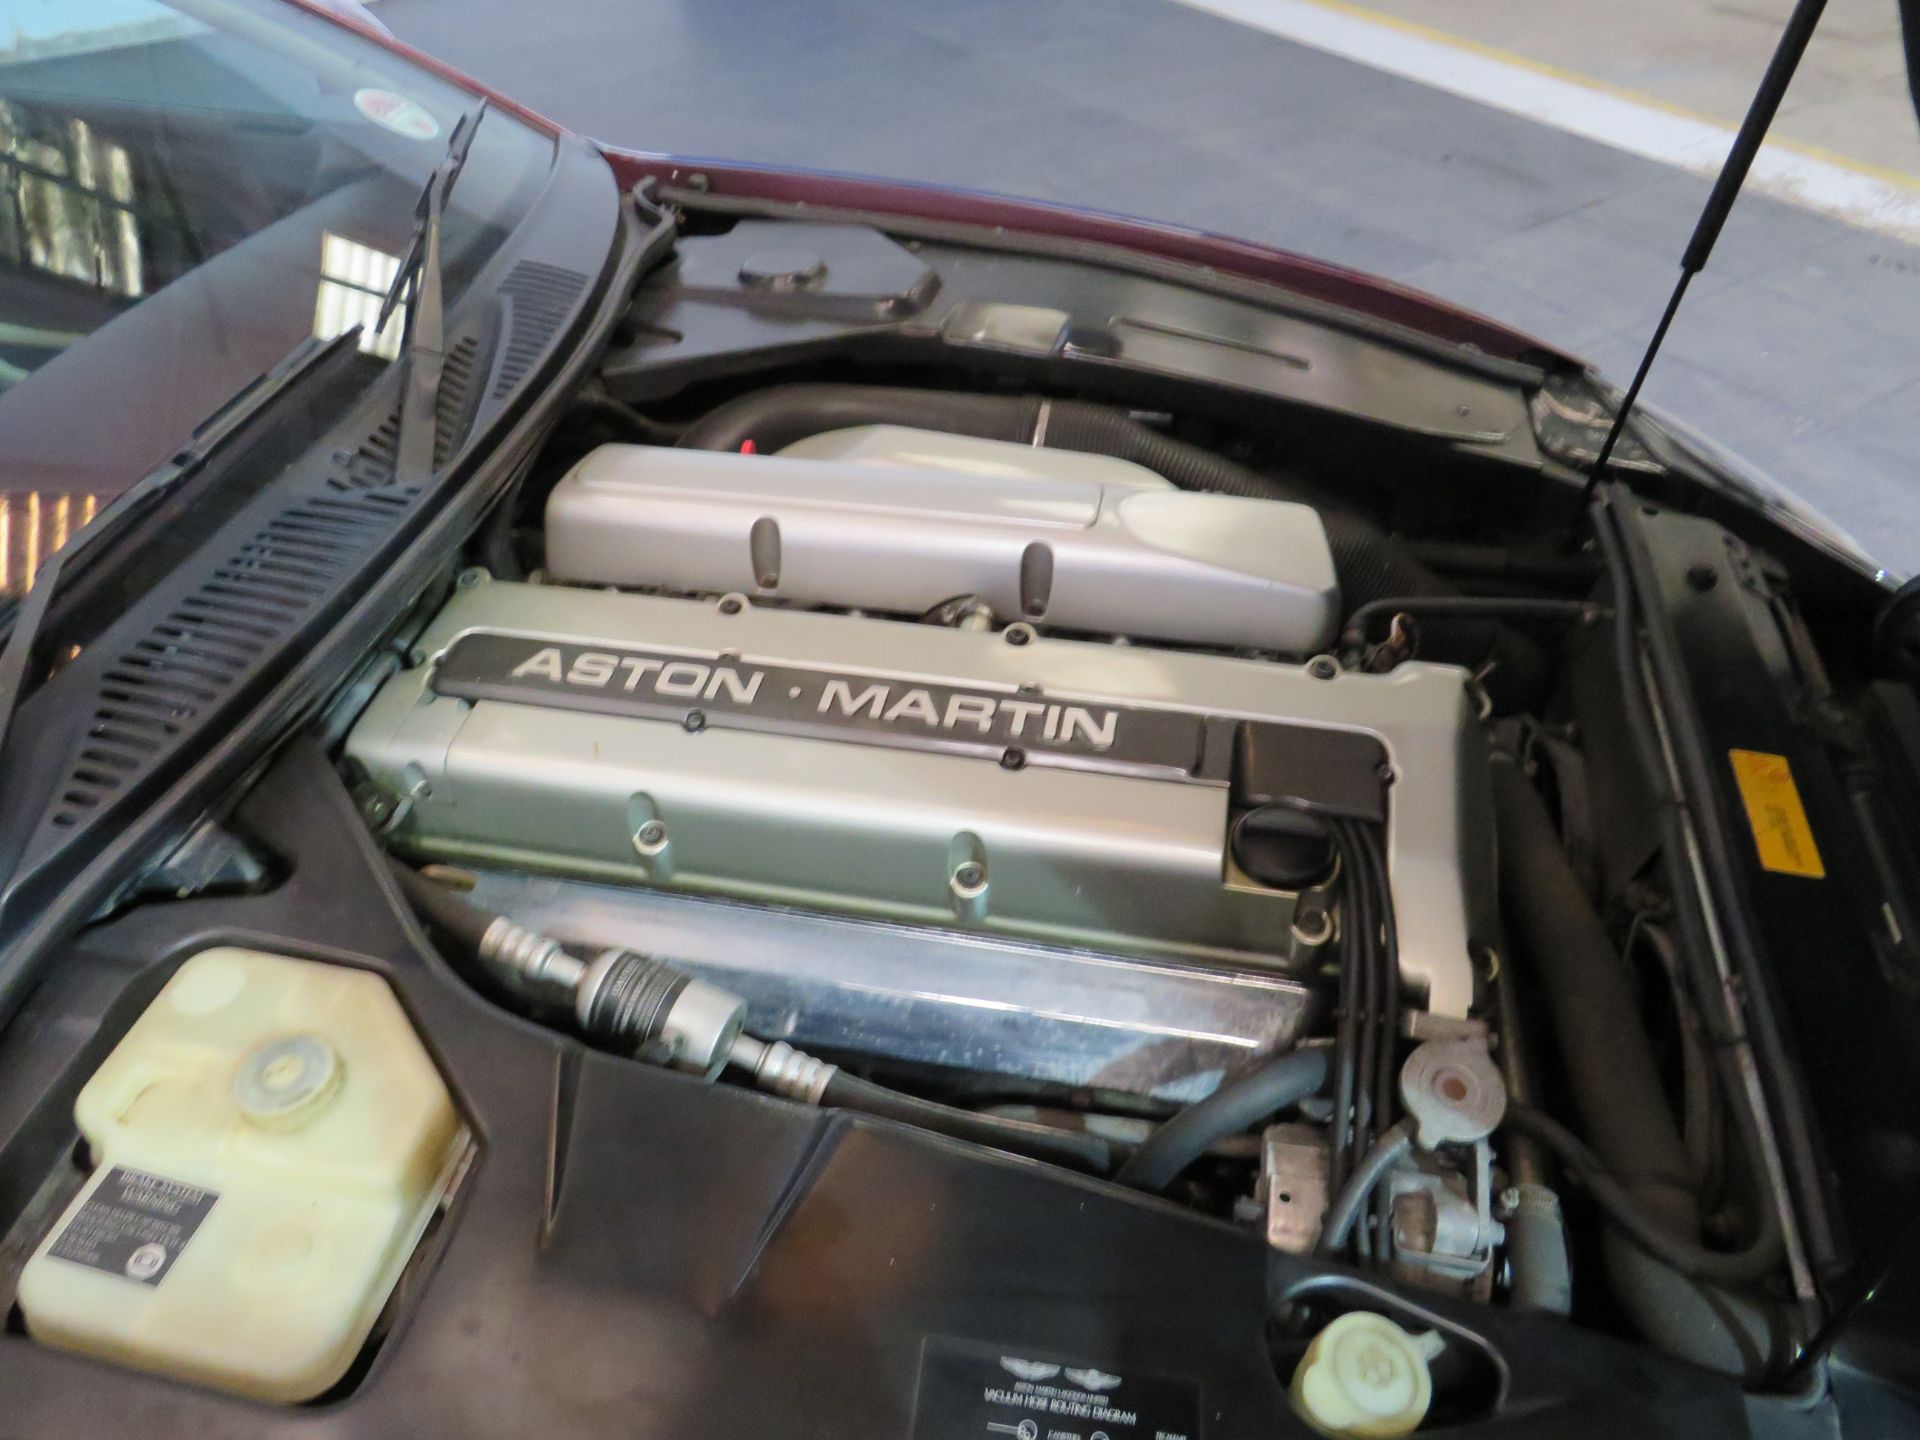 1996 Aston Martin DB7 Auto Coupe - 3239cc - Image 13 of 21